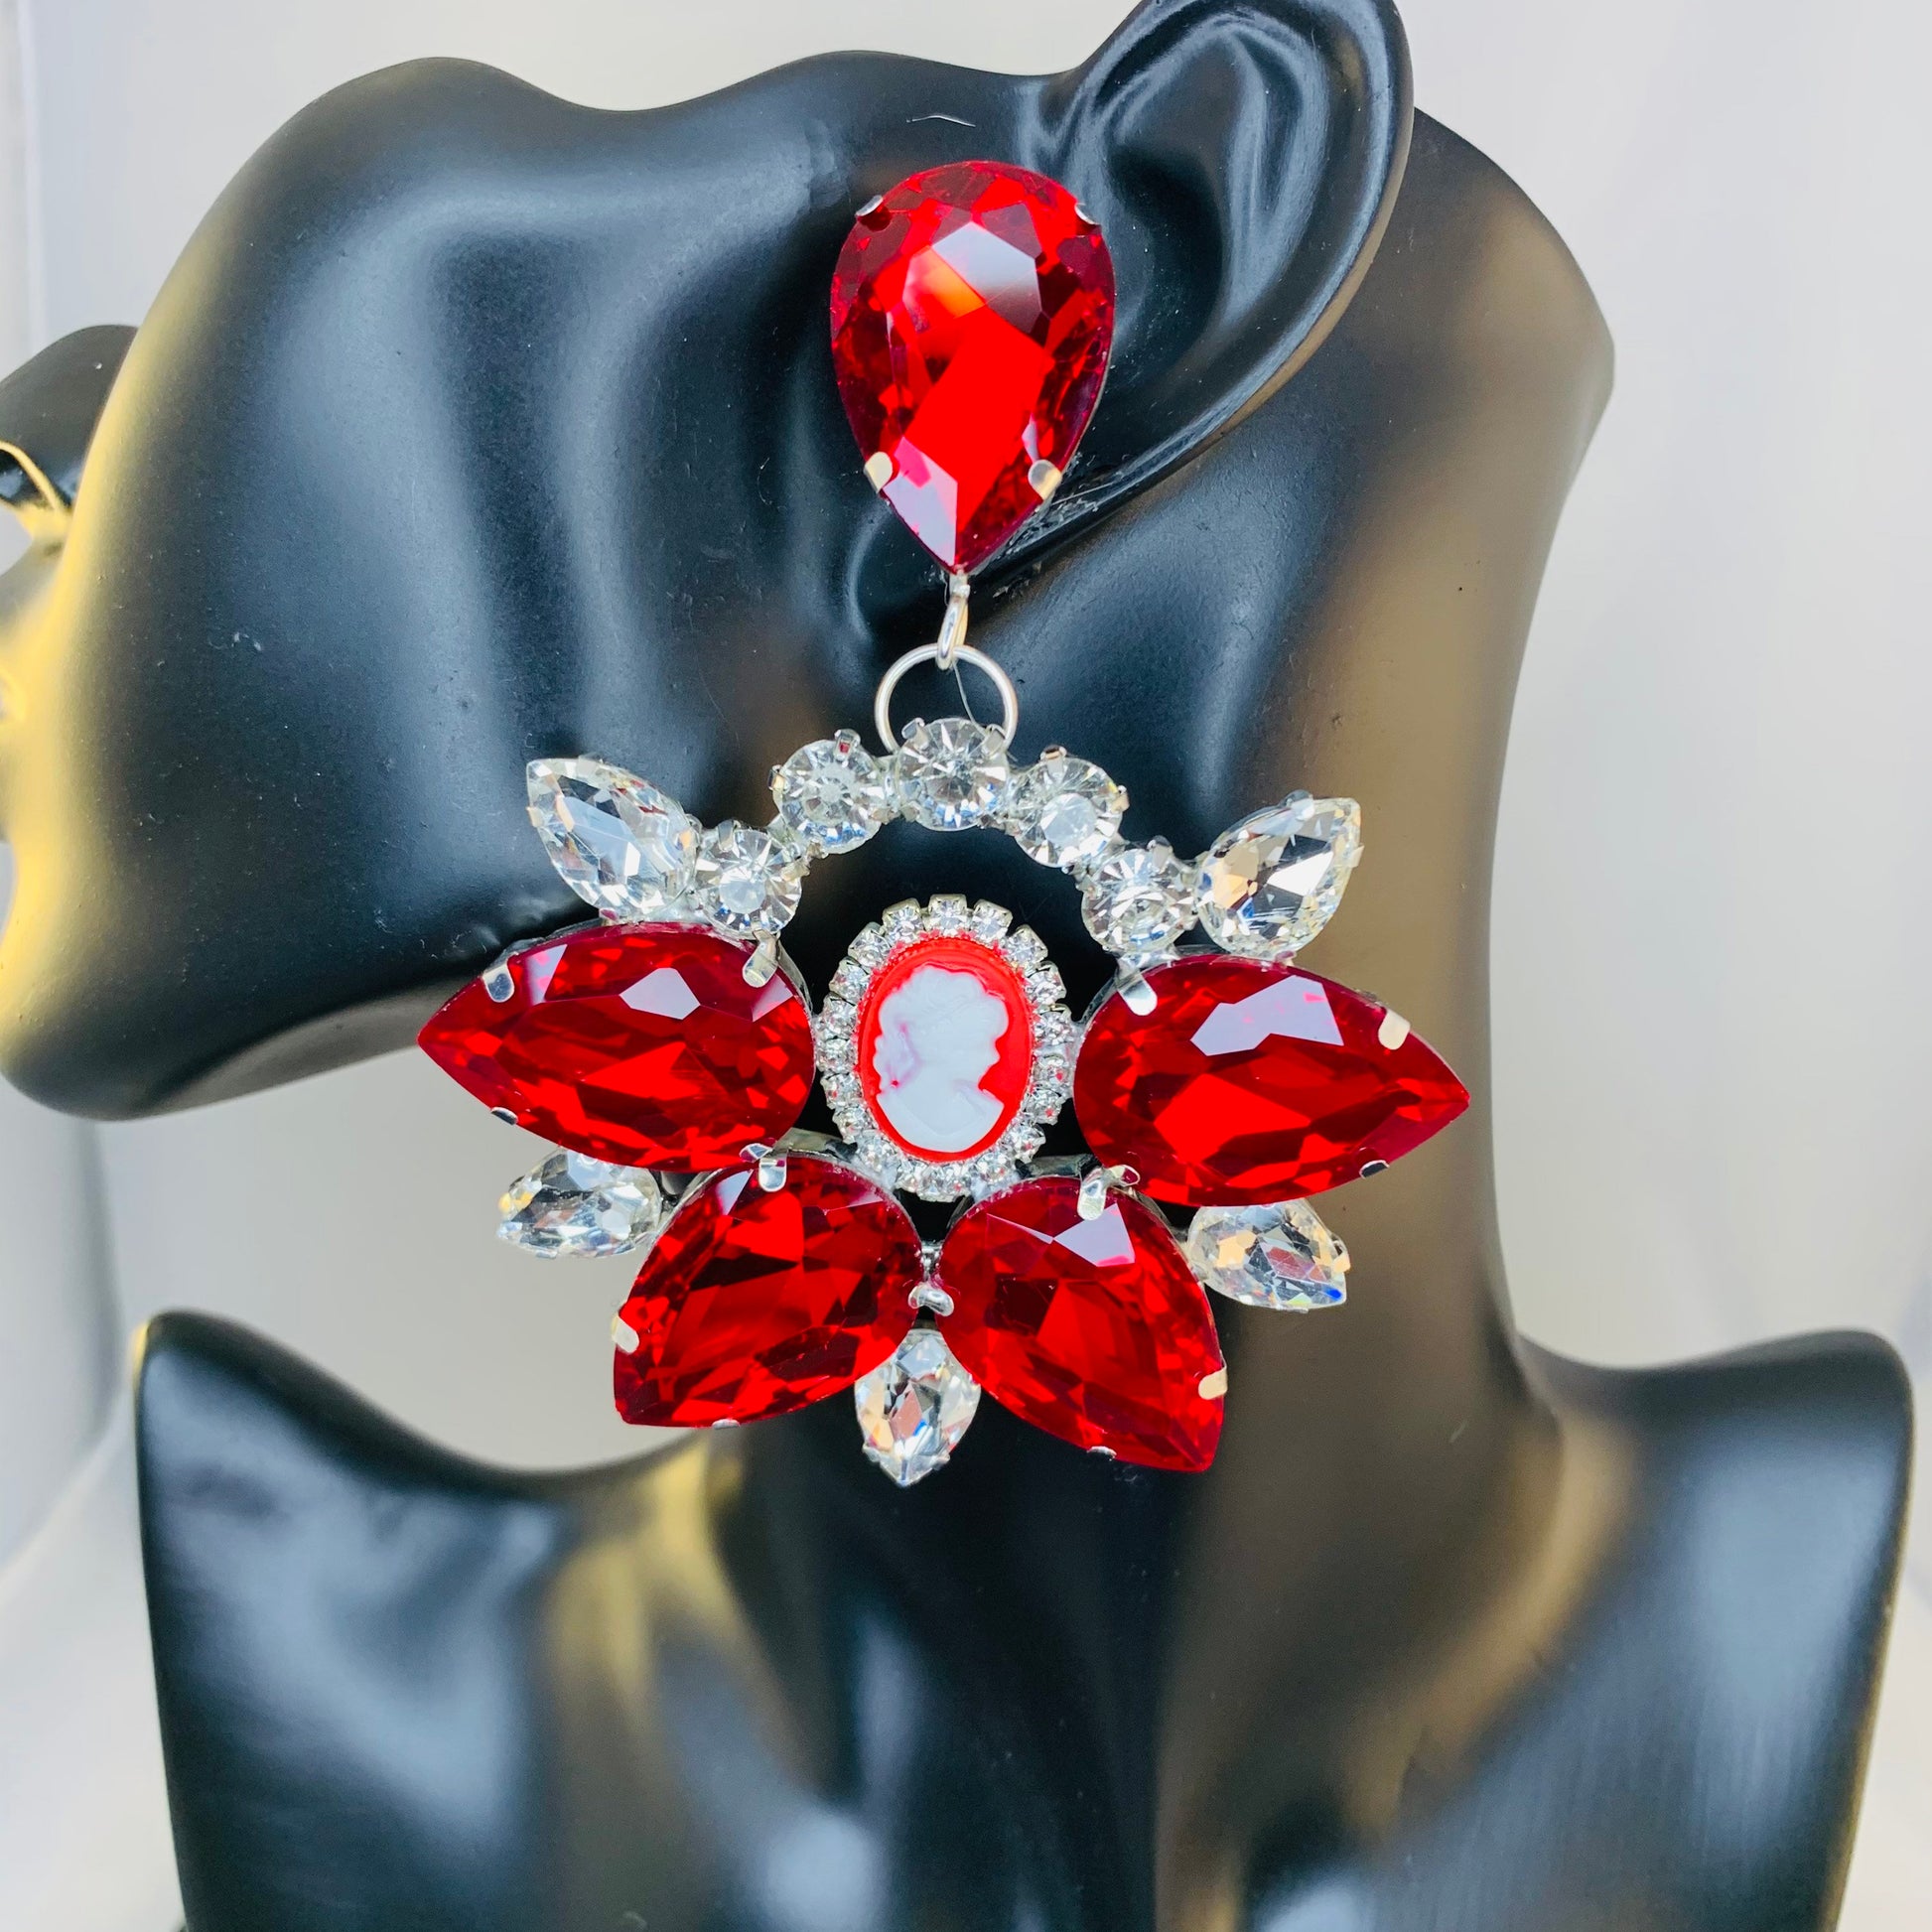 Cameo Earrings / Clip On or Pierced / Statement Earrings / Crystal Jewelry / Dress Earrings / Drag Queen / phantom of the opera